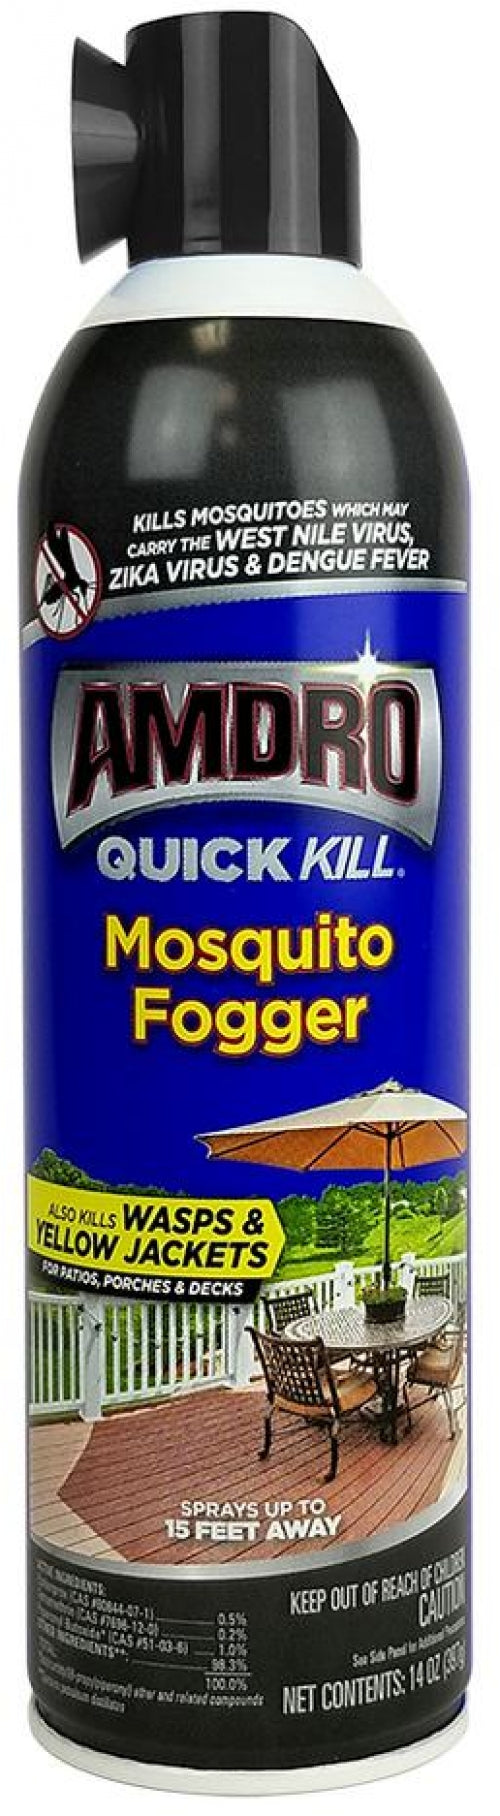 #8339 - Amdro Mosquito Fogger